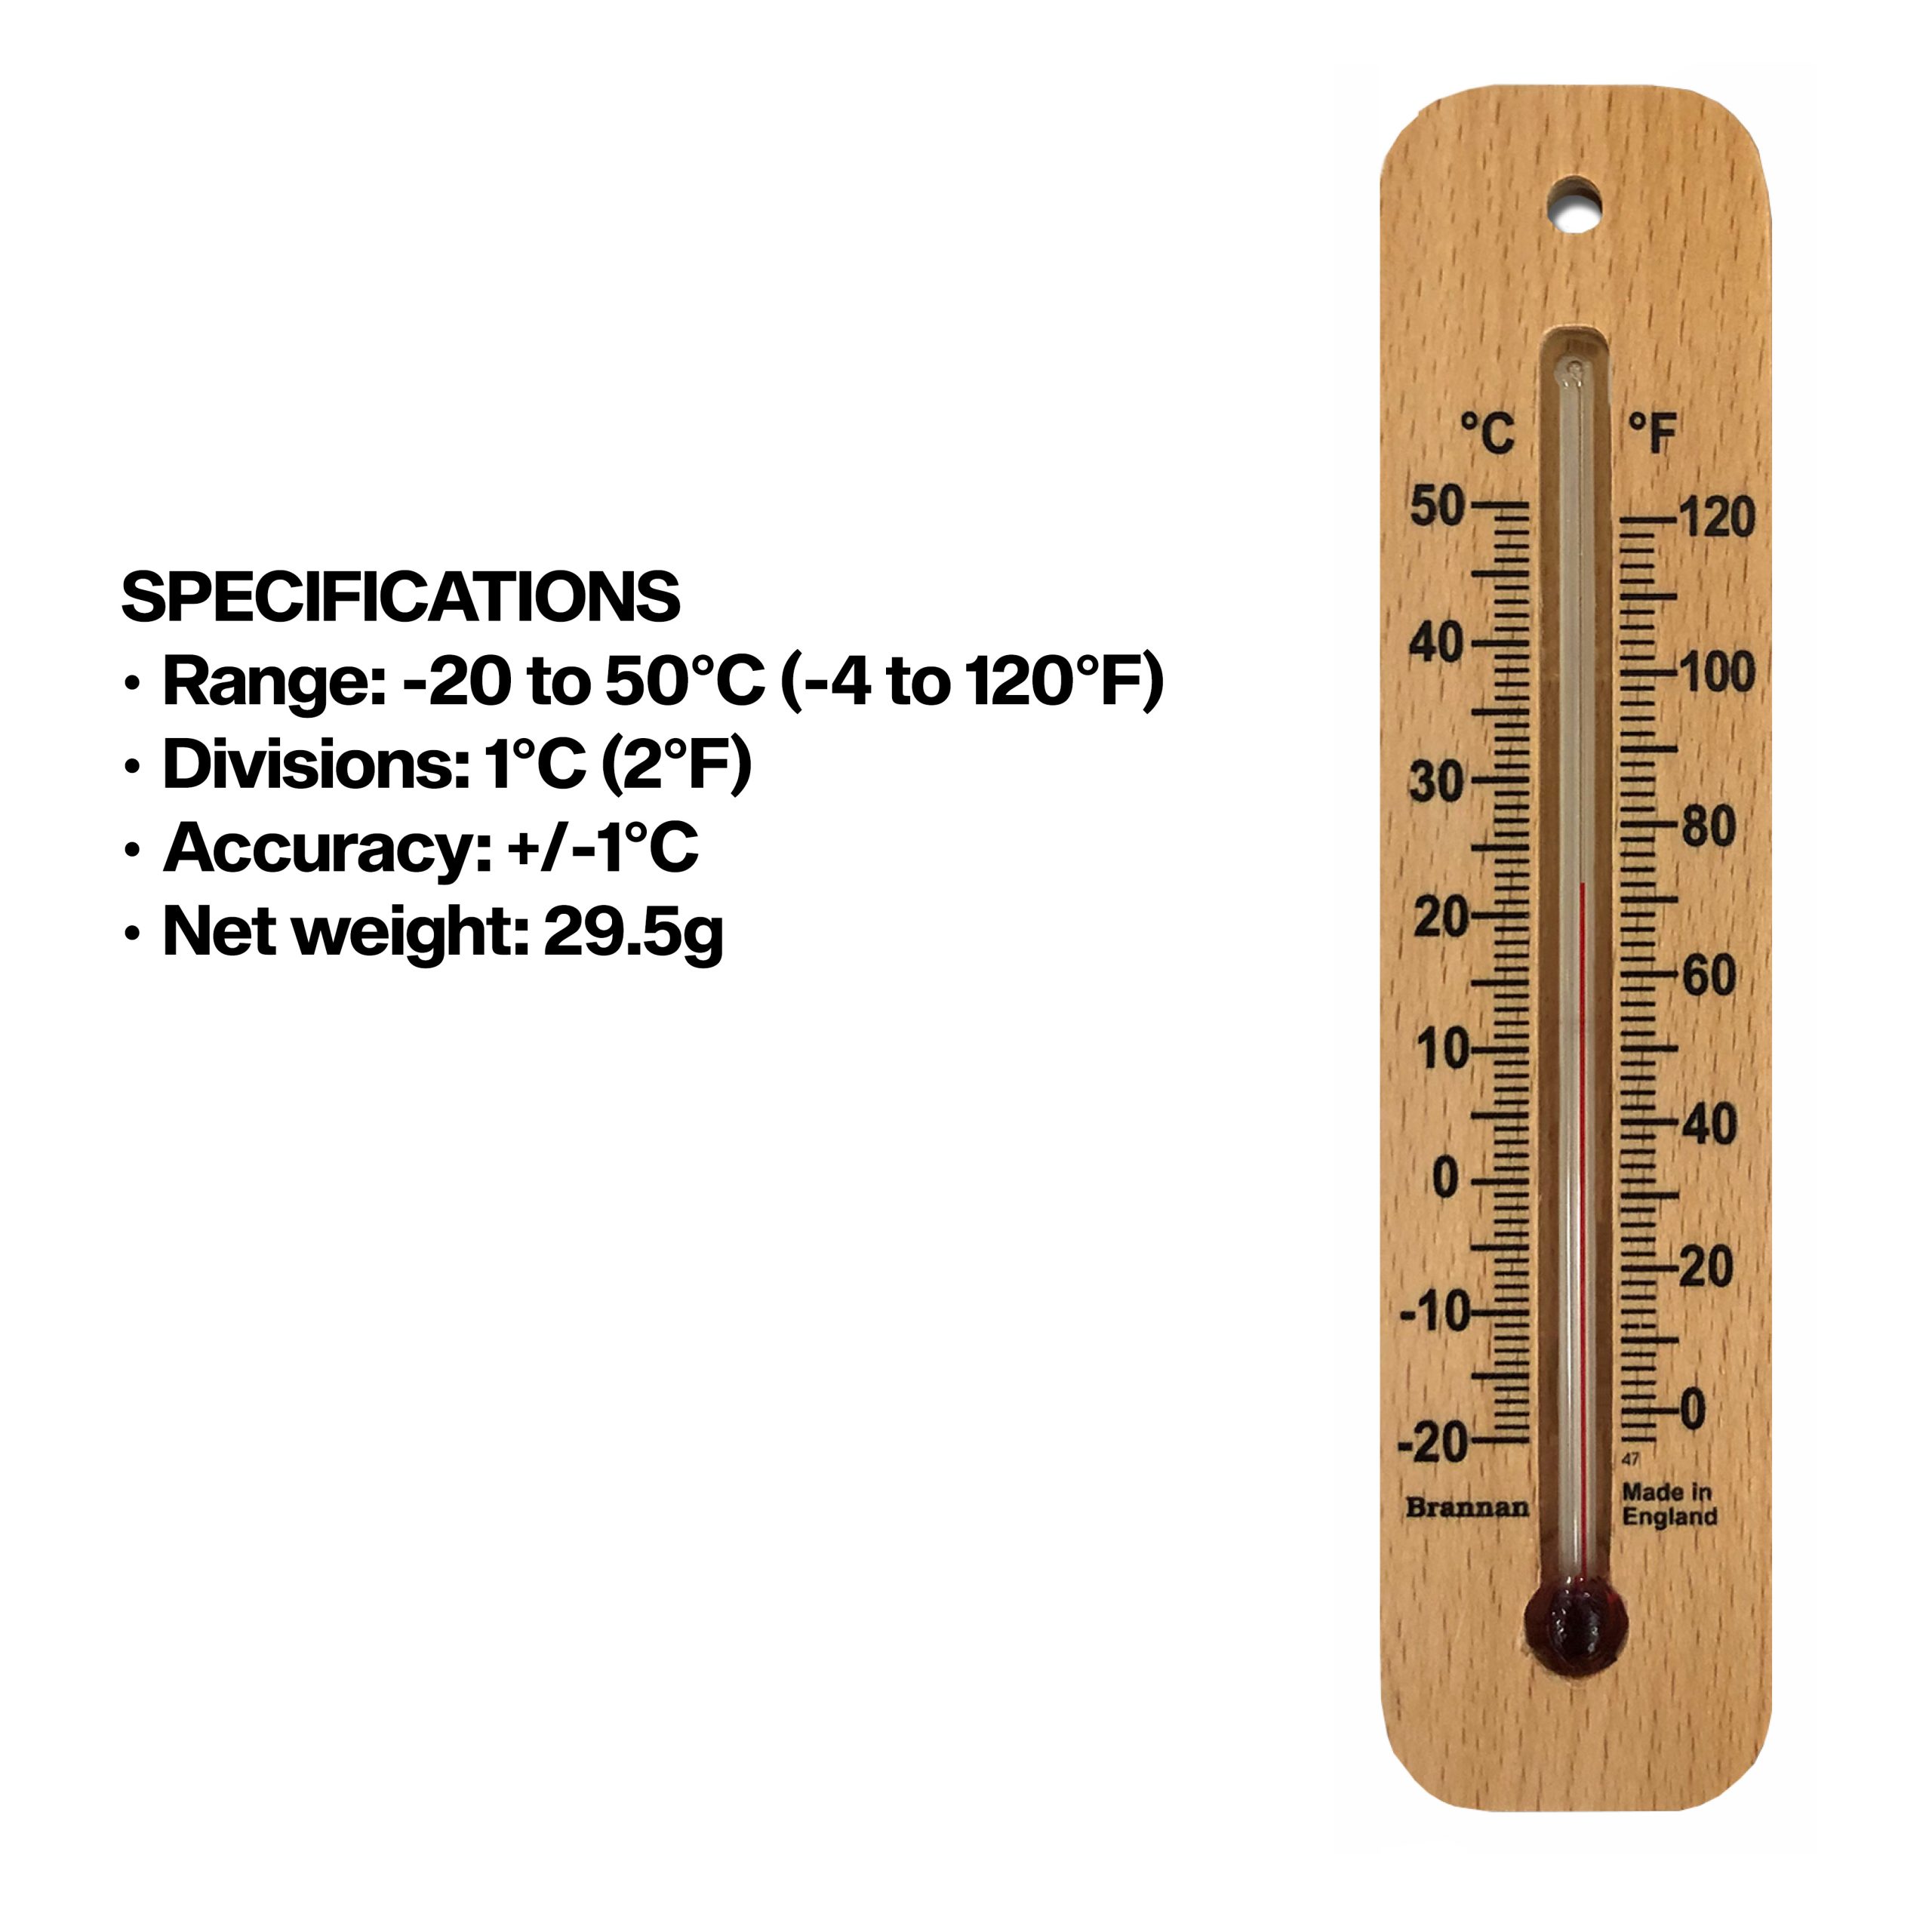 Brannan™ Styrene Wall Thermometer